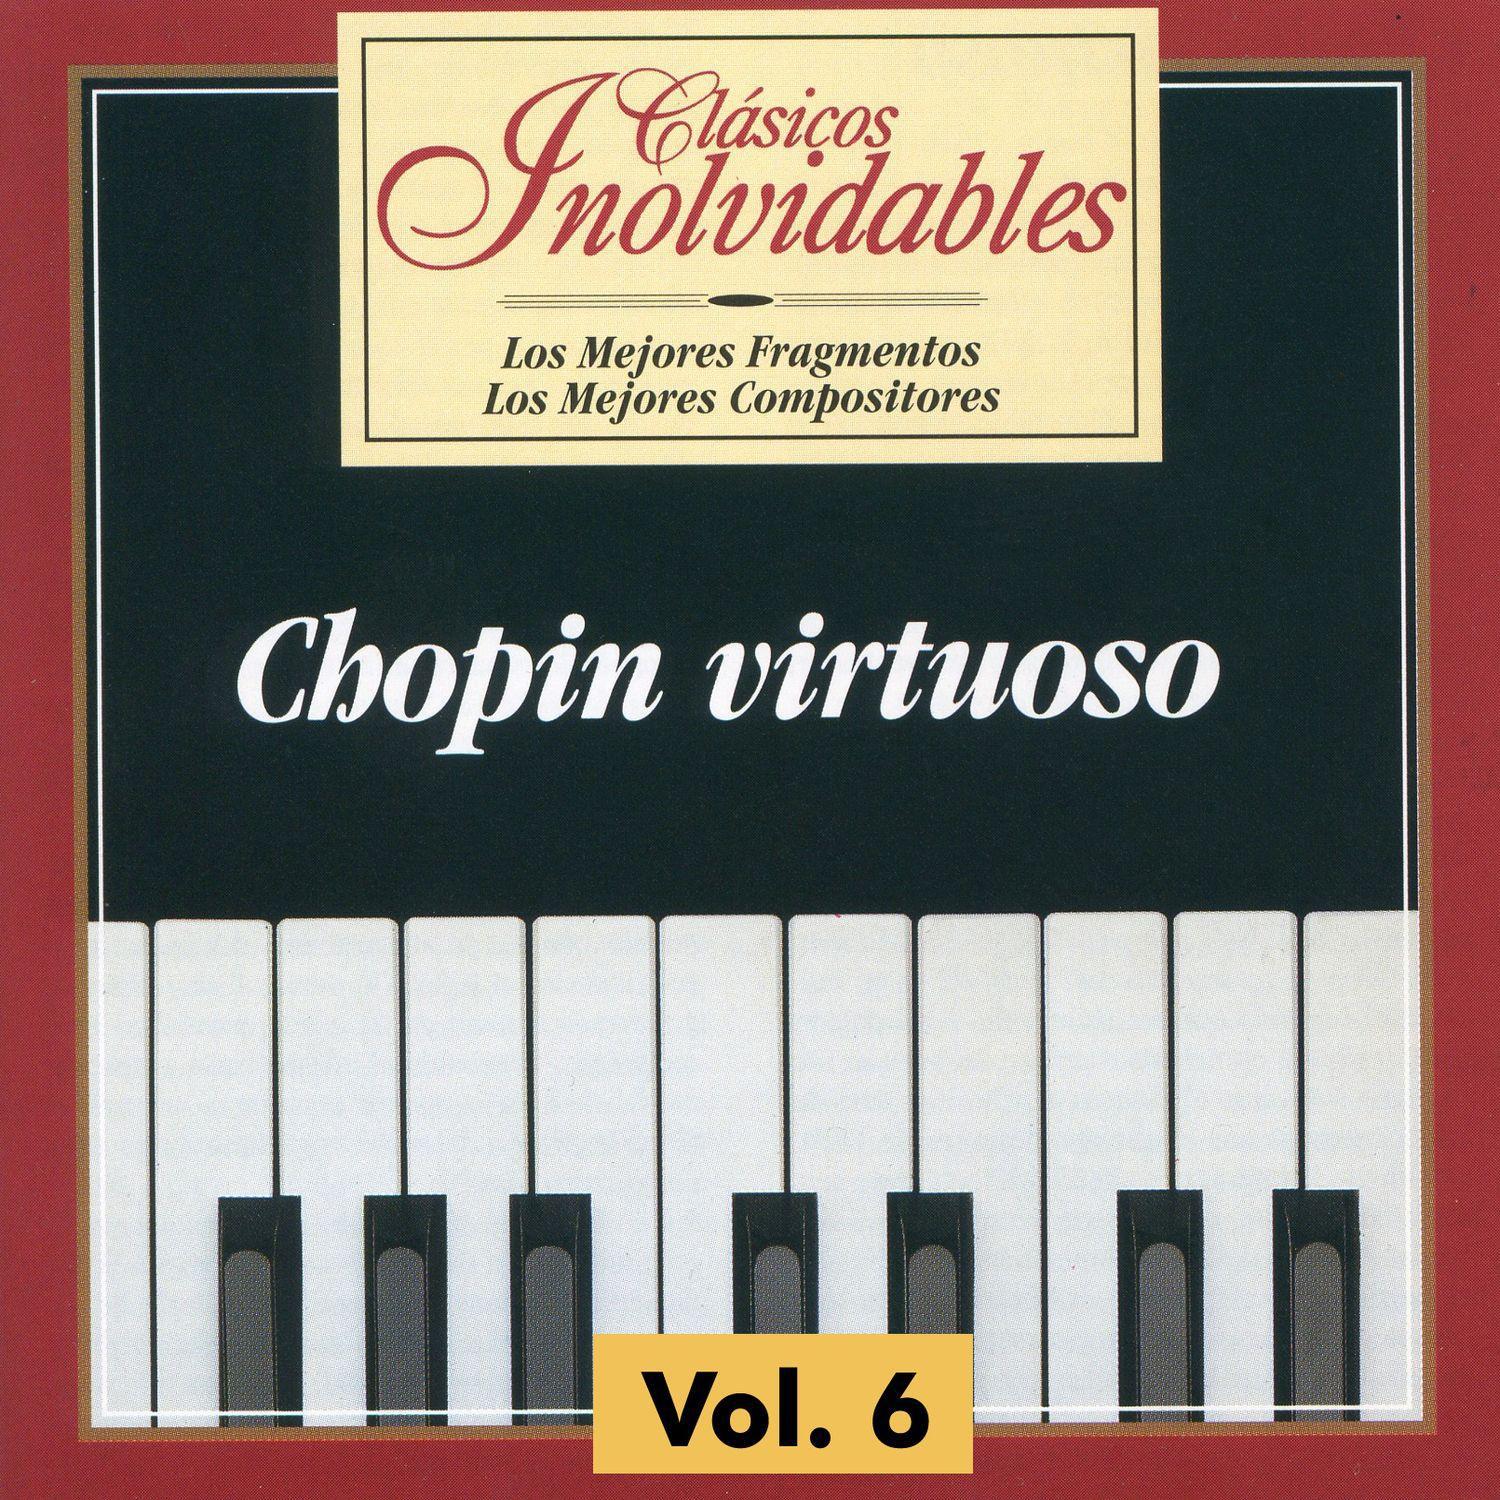 Cla sicos Inolvidables Vol. 6, Chopin Virtuoso